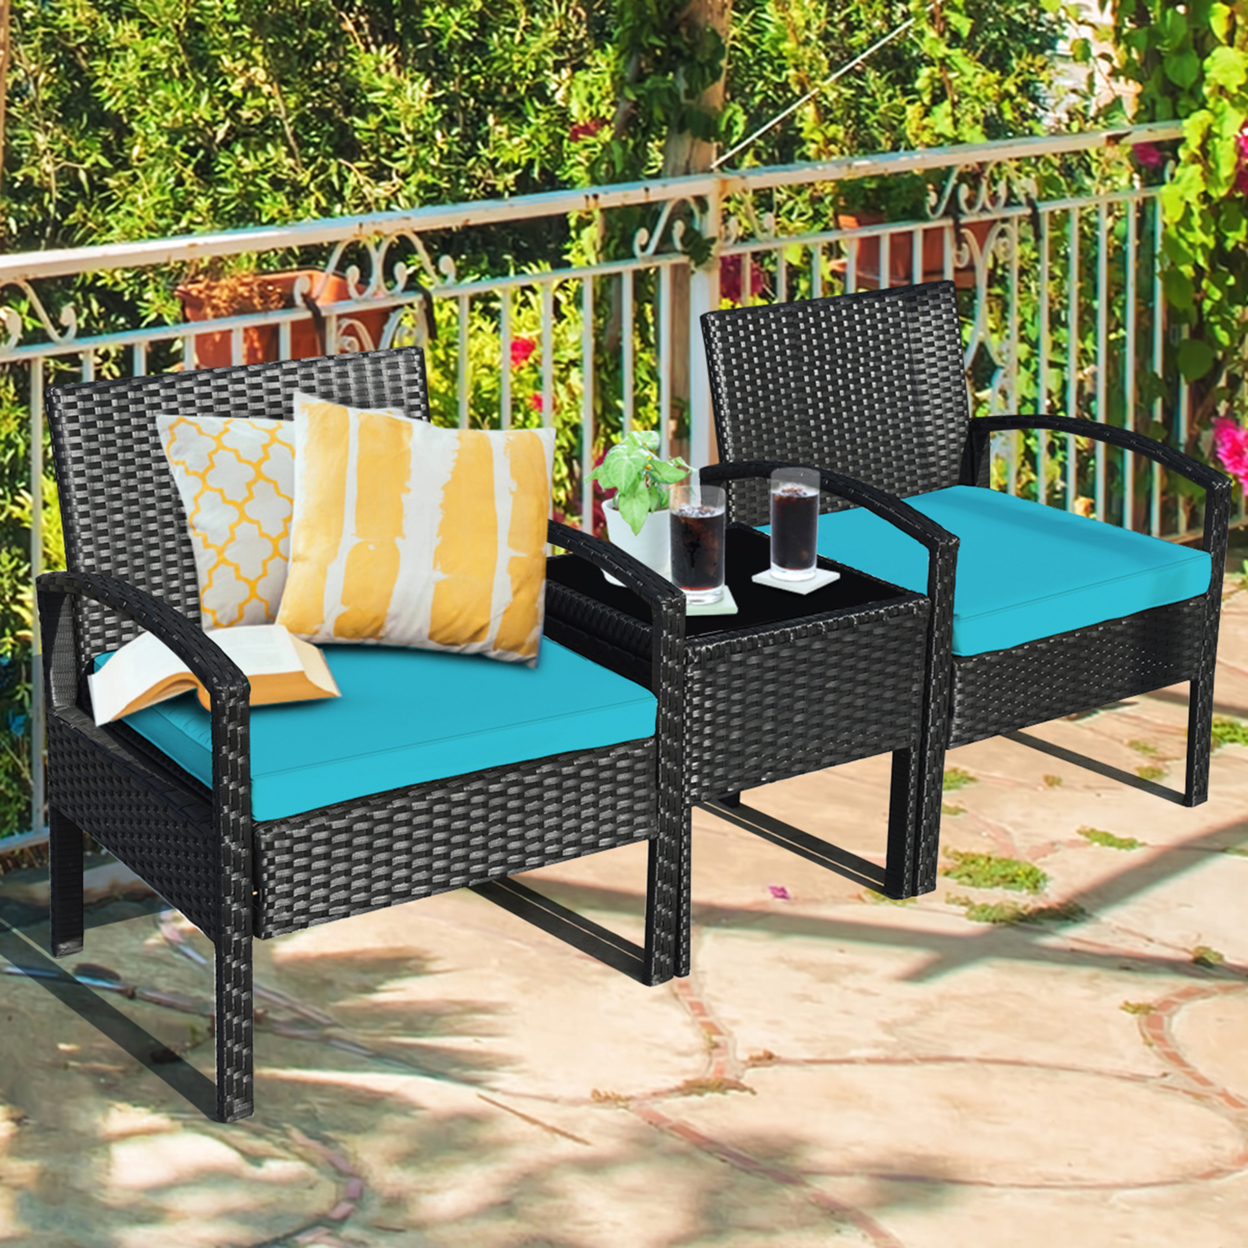 3PCS Patio Rattan Conversation Furniture Set Outdoor Yard W/ Turquoise Cushions